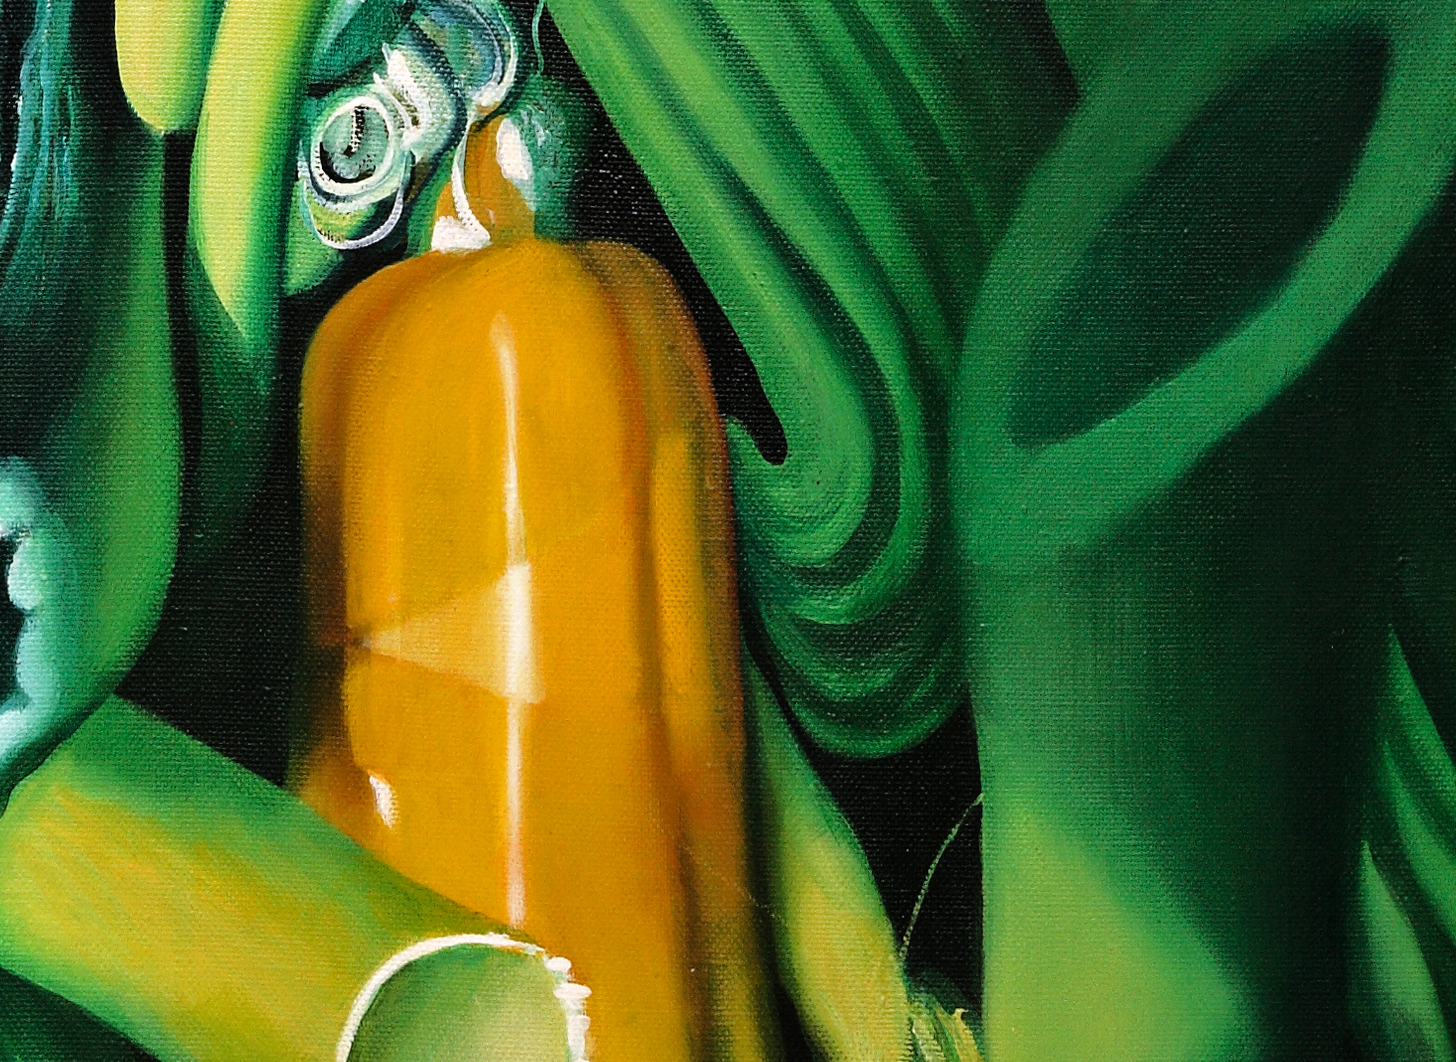 "From the life of zucchini". Artist Olga Grechina. Painting.